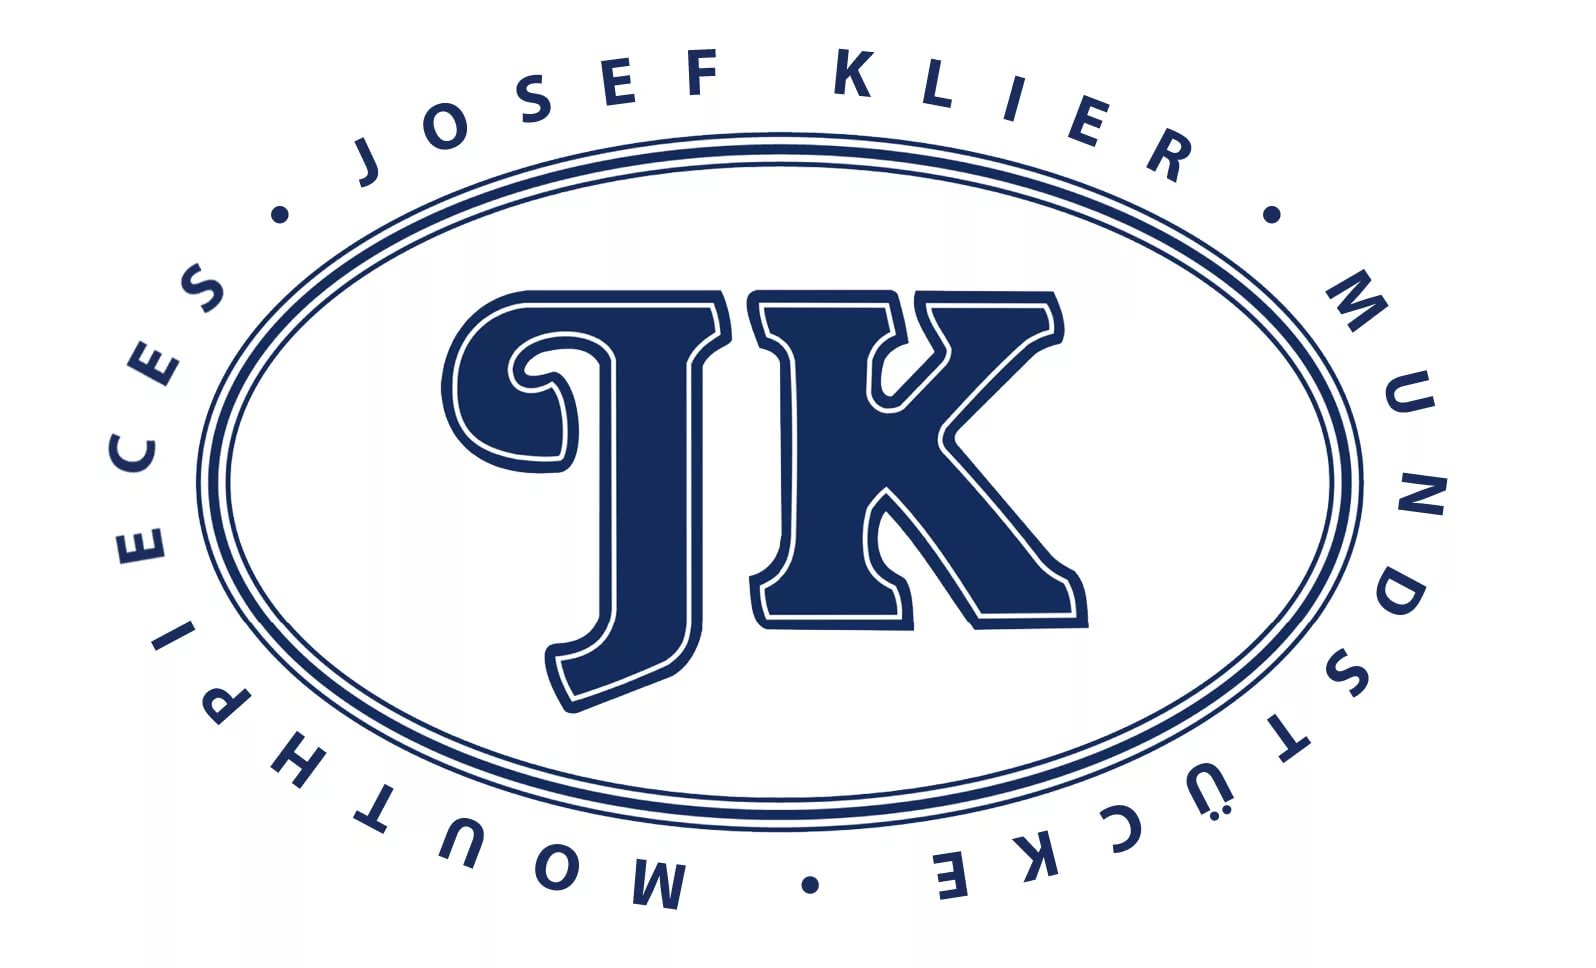 Josef Klier